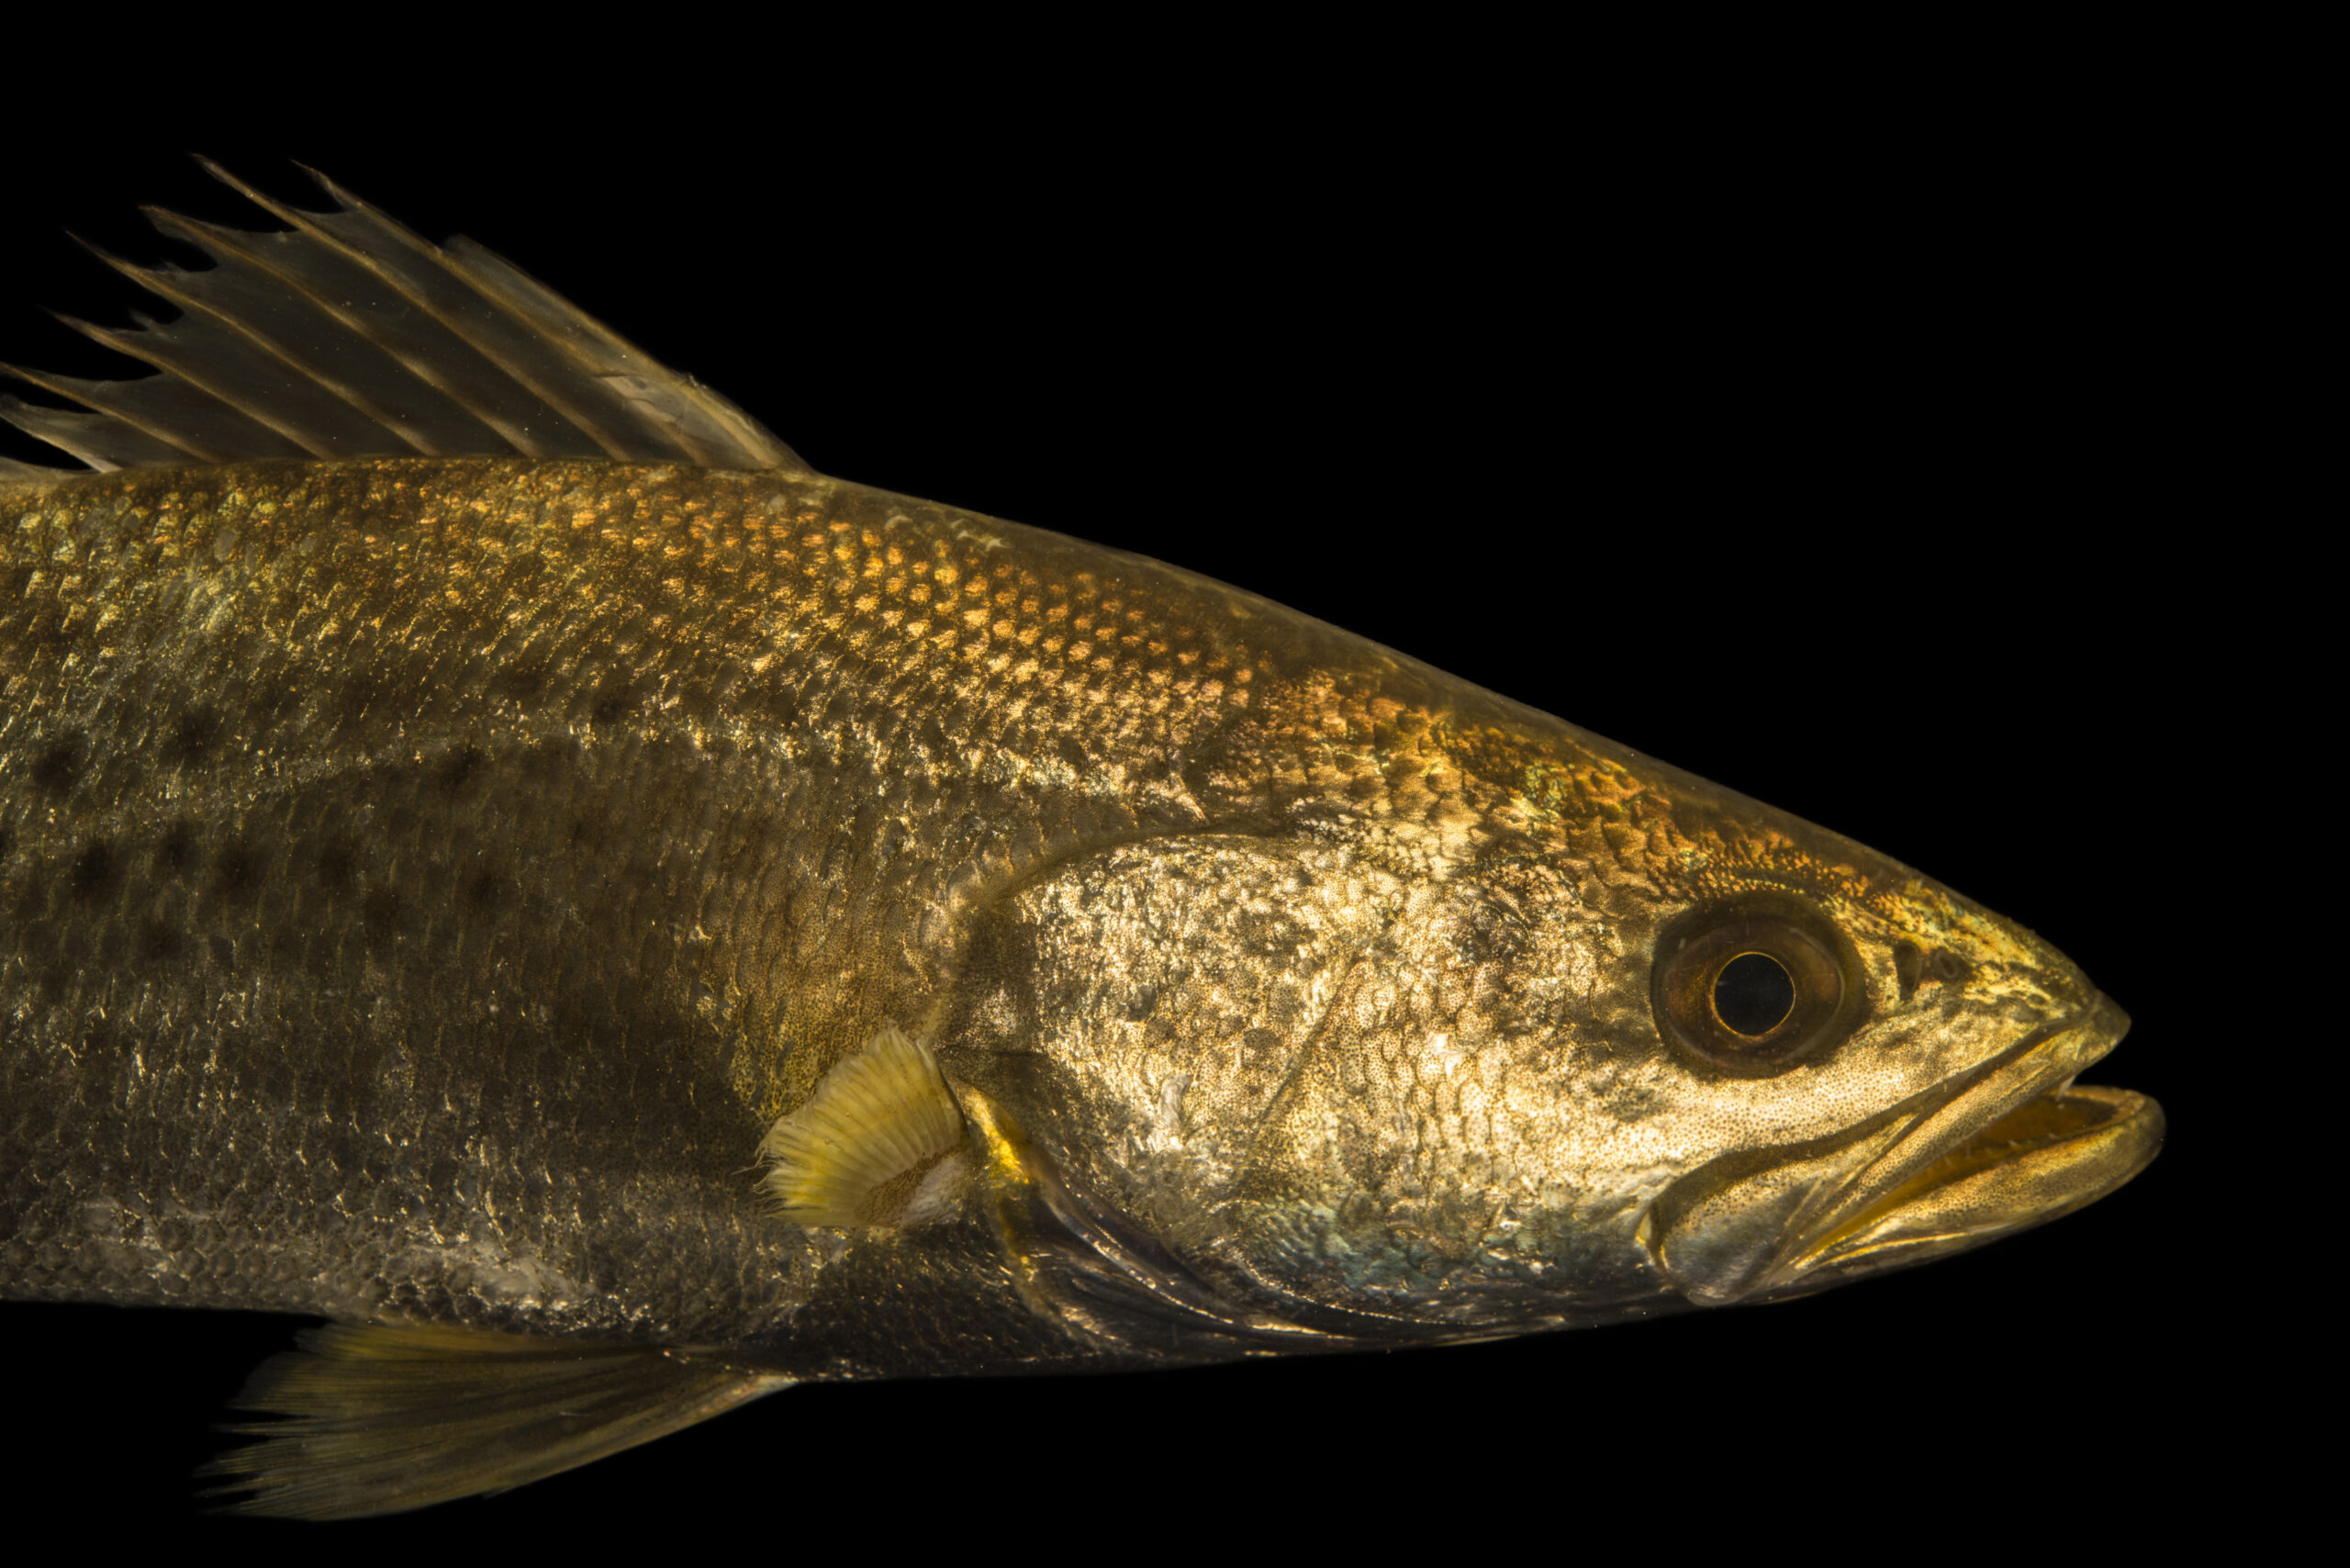 Speckled sea trout (Cynoscion nebulosus) at Gulf Specimen Marine Lab and Aquarium.